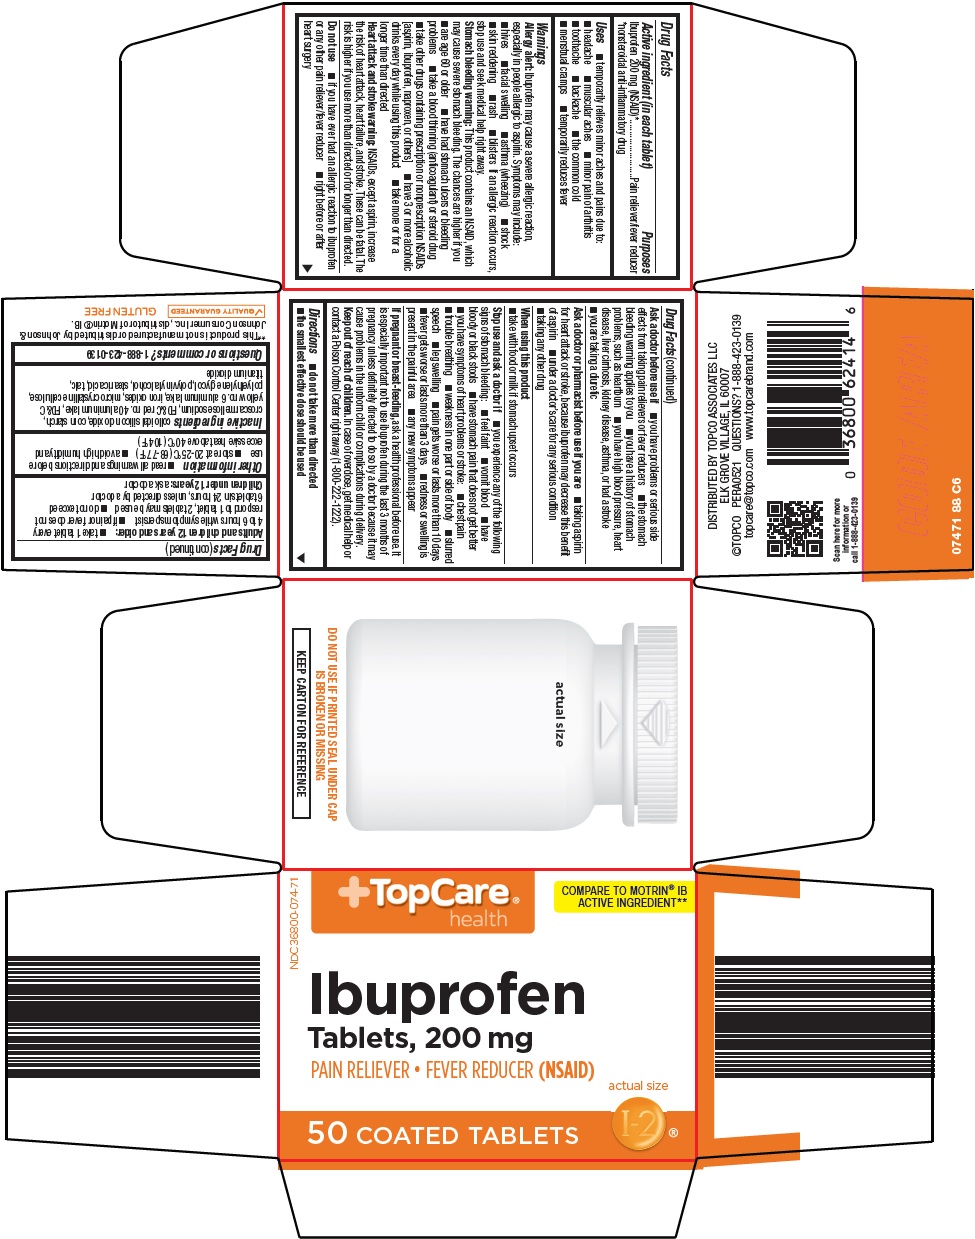 074-88-ibuprofen